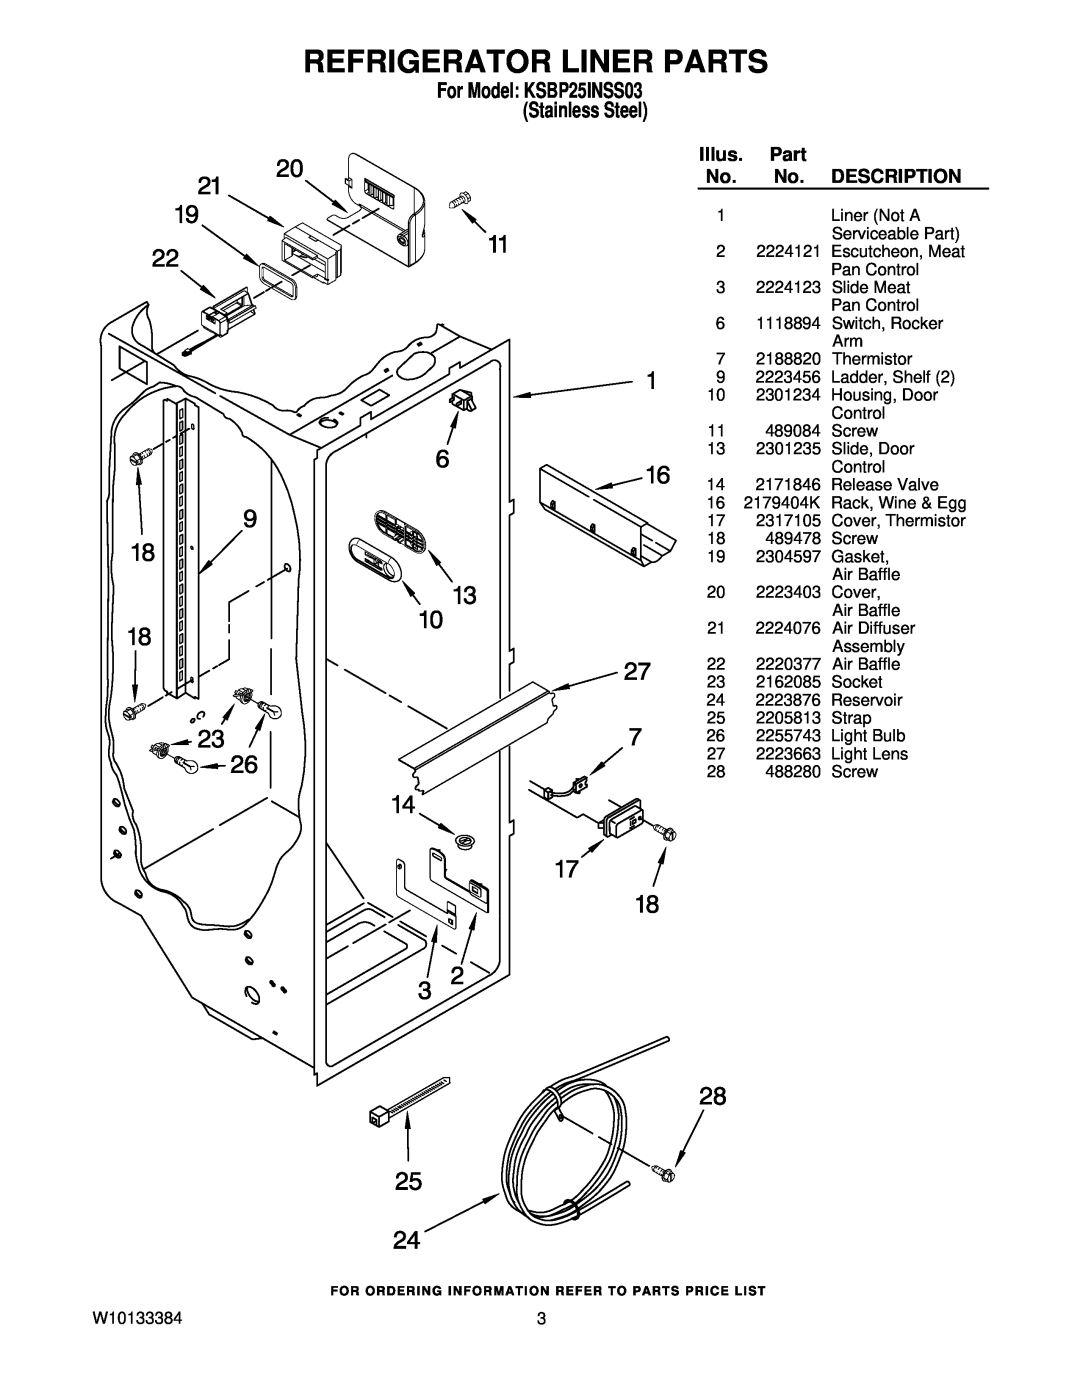 KitchenAid manual Refrigerator Liner Parts, For Model KSBP25INSS03 Stainless Steel, Illus, Description 